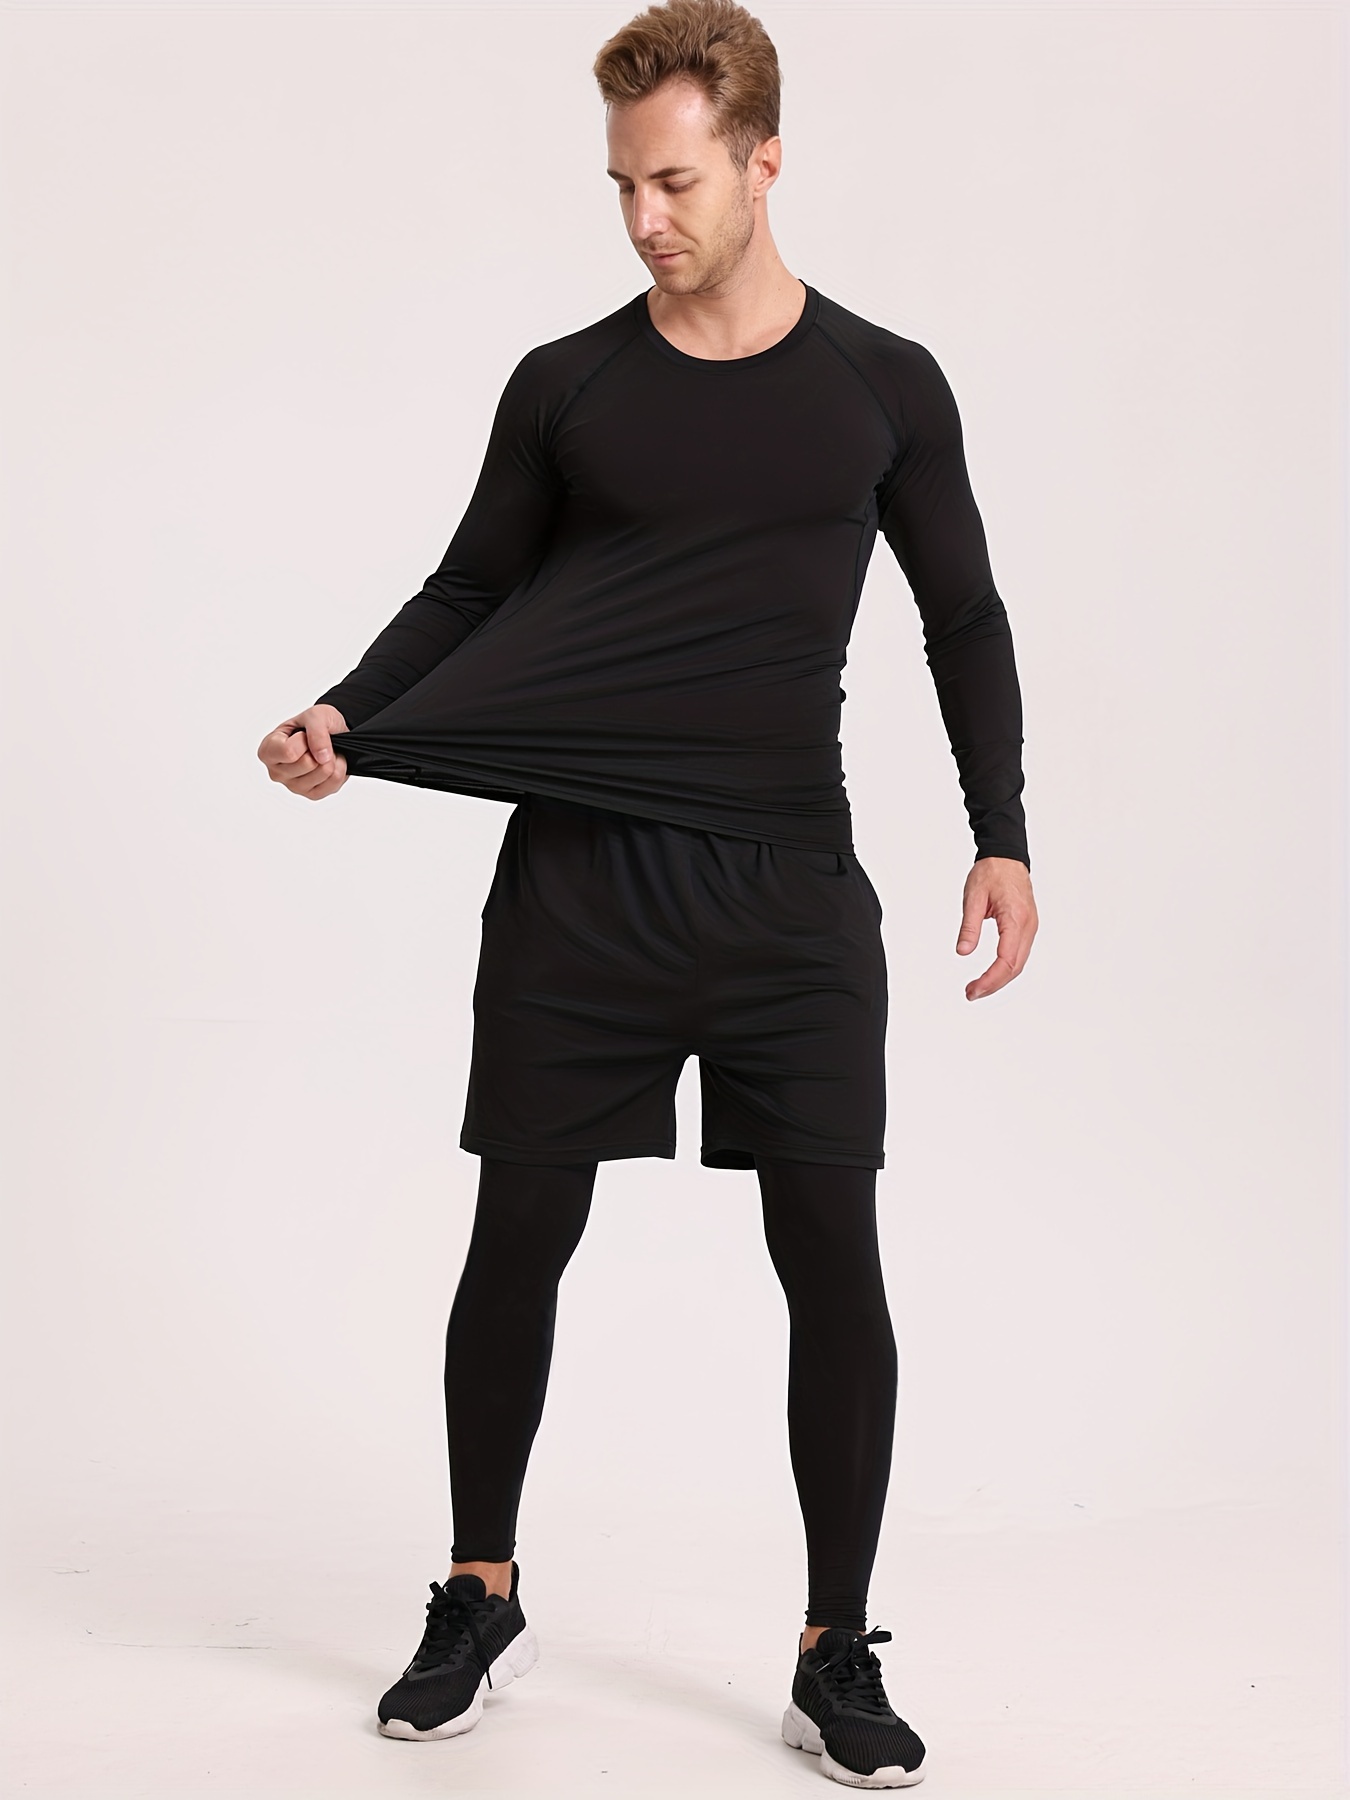 Base Layer Ski Thermal Underwear Set – Pomkin